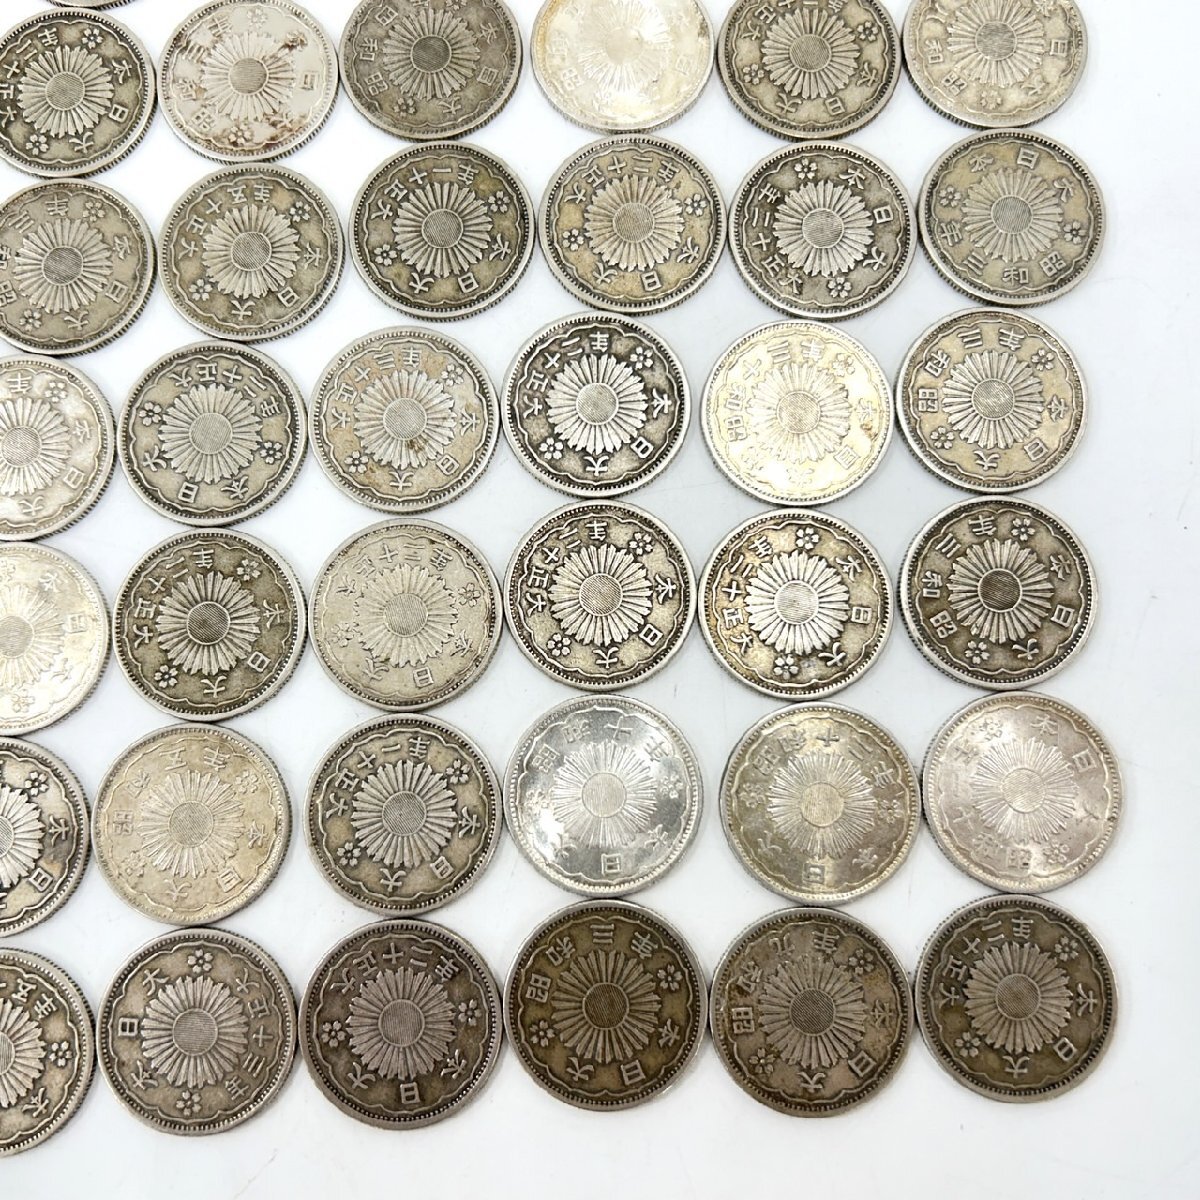 1 jpy start large Japan 50 sen silver coin 65 pieces set asahi day old coin 50 sen sphere money coin old coin Taisho Showa era antique . summarize 